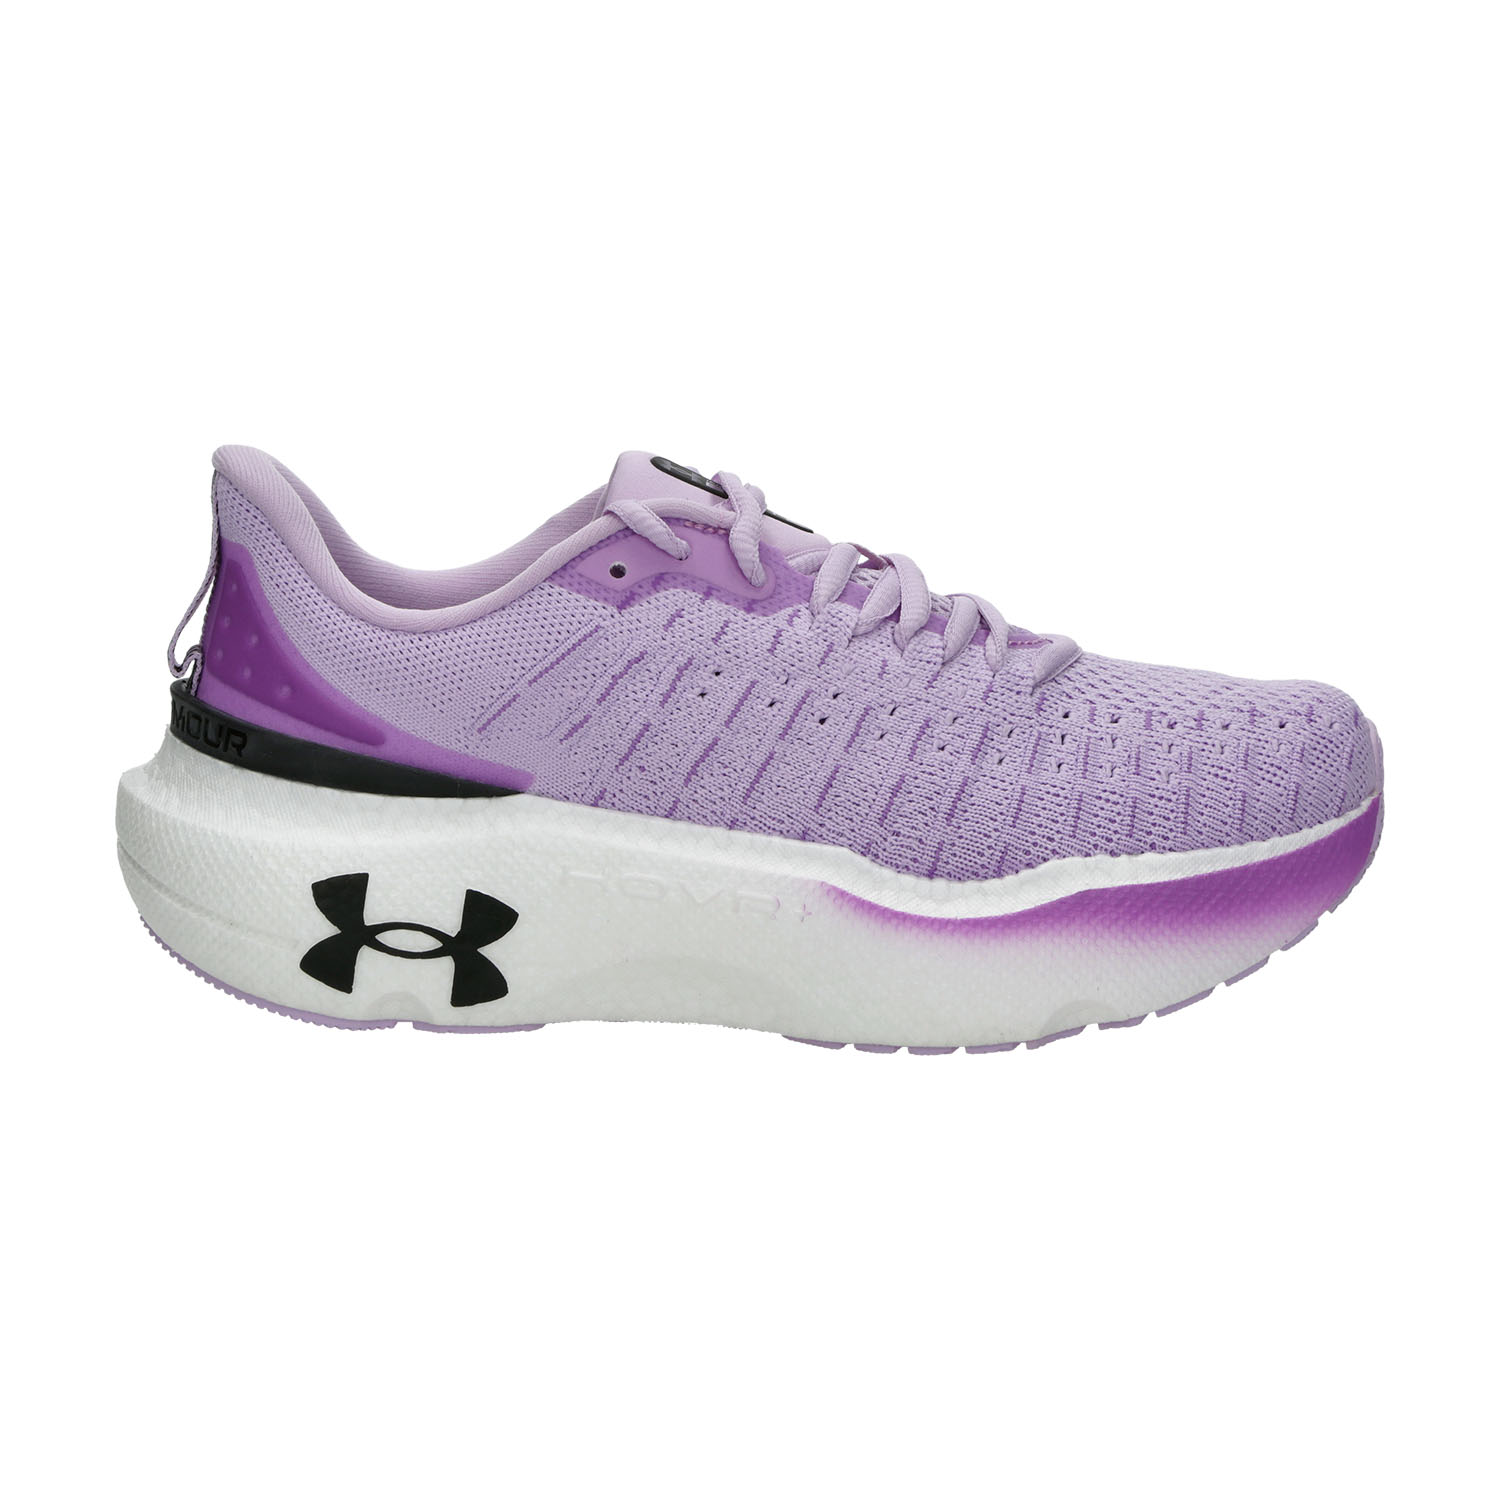 Under Armour Infinite Elite Women's Running Shoes - Purple Ace